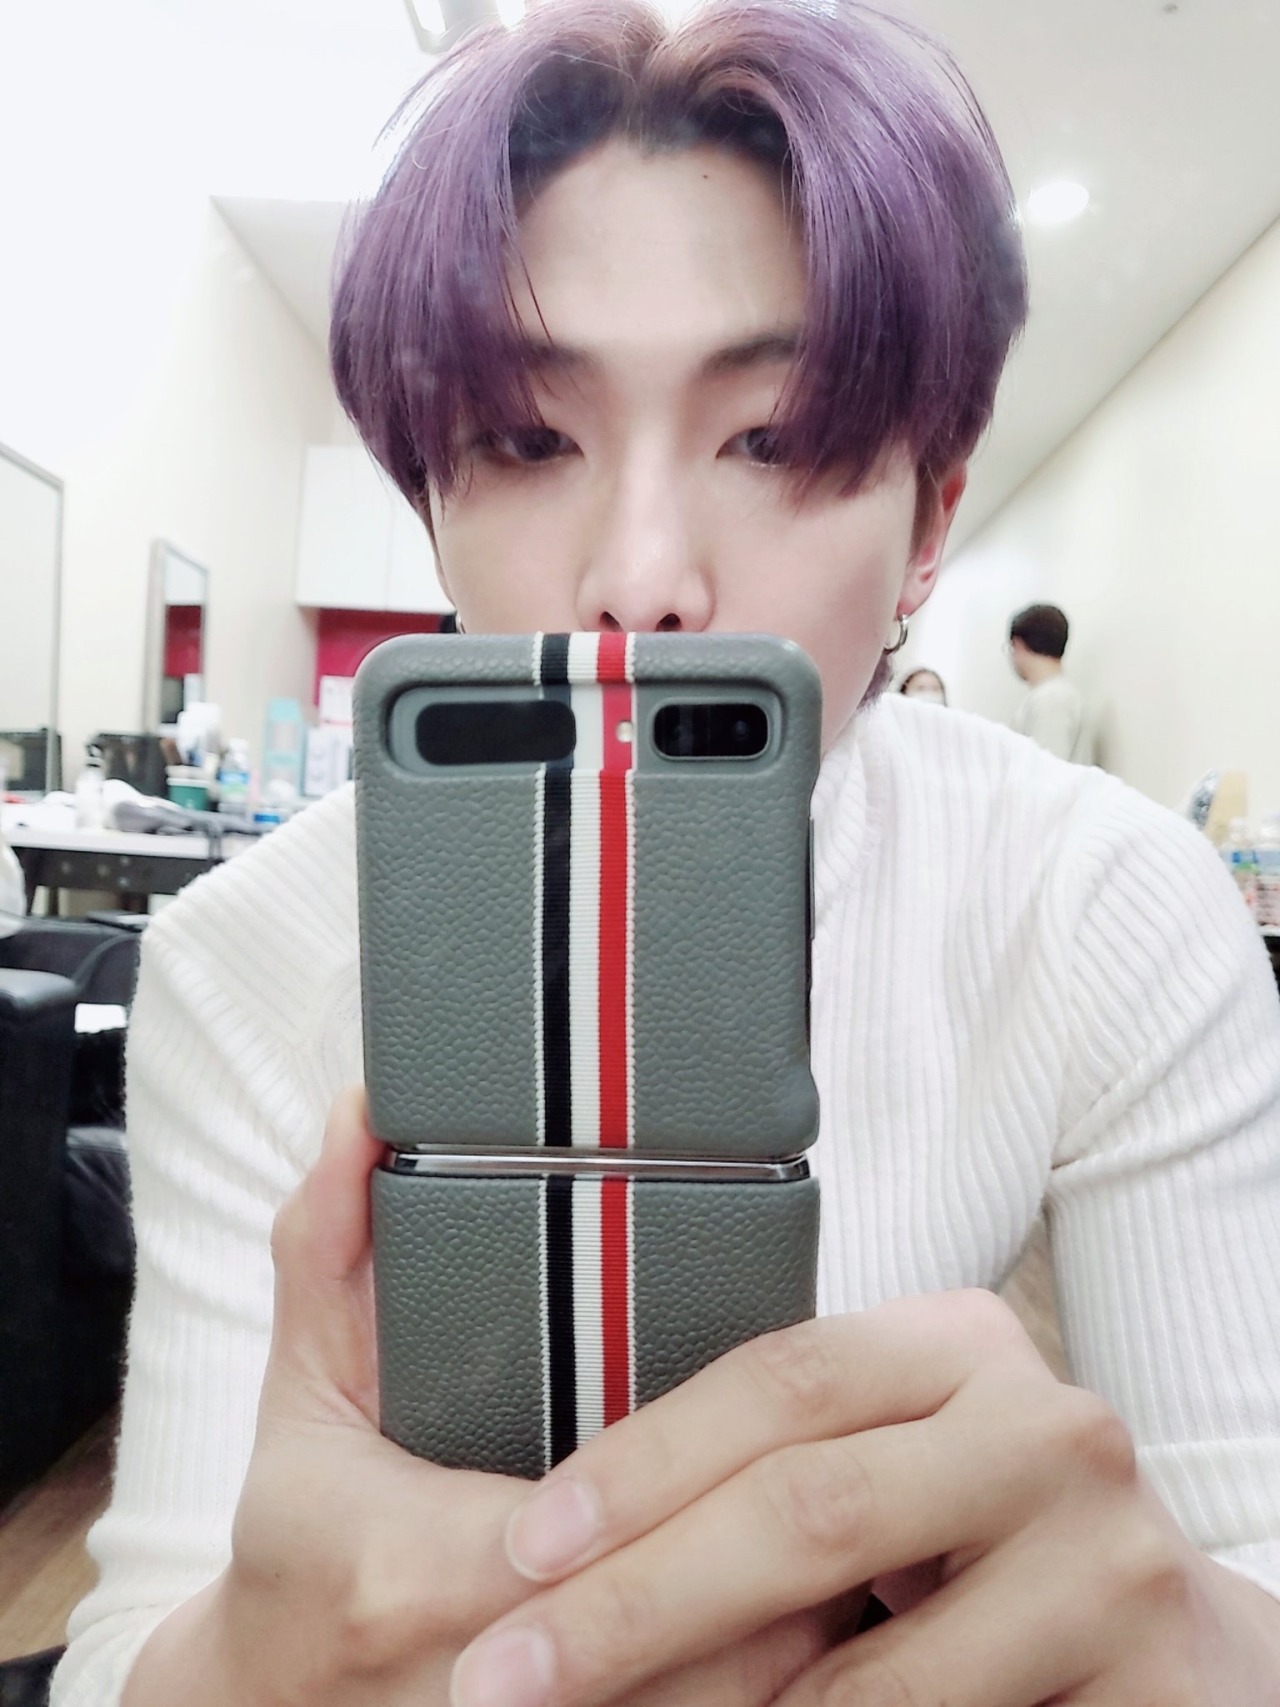 Precious Namjoon Mirror Selfies! (20)